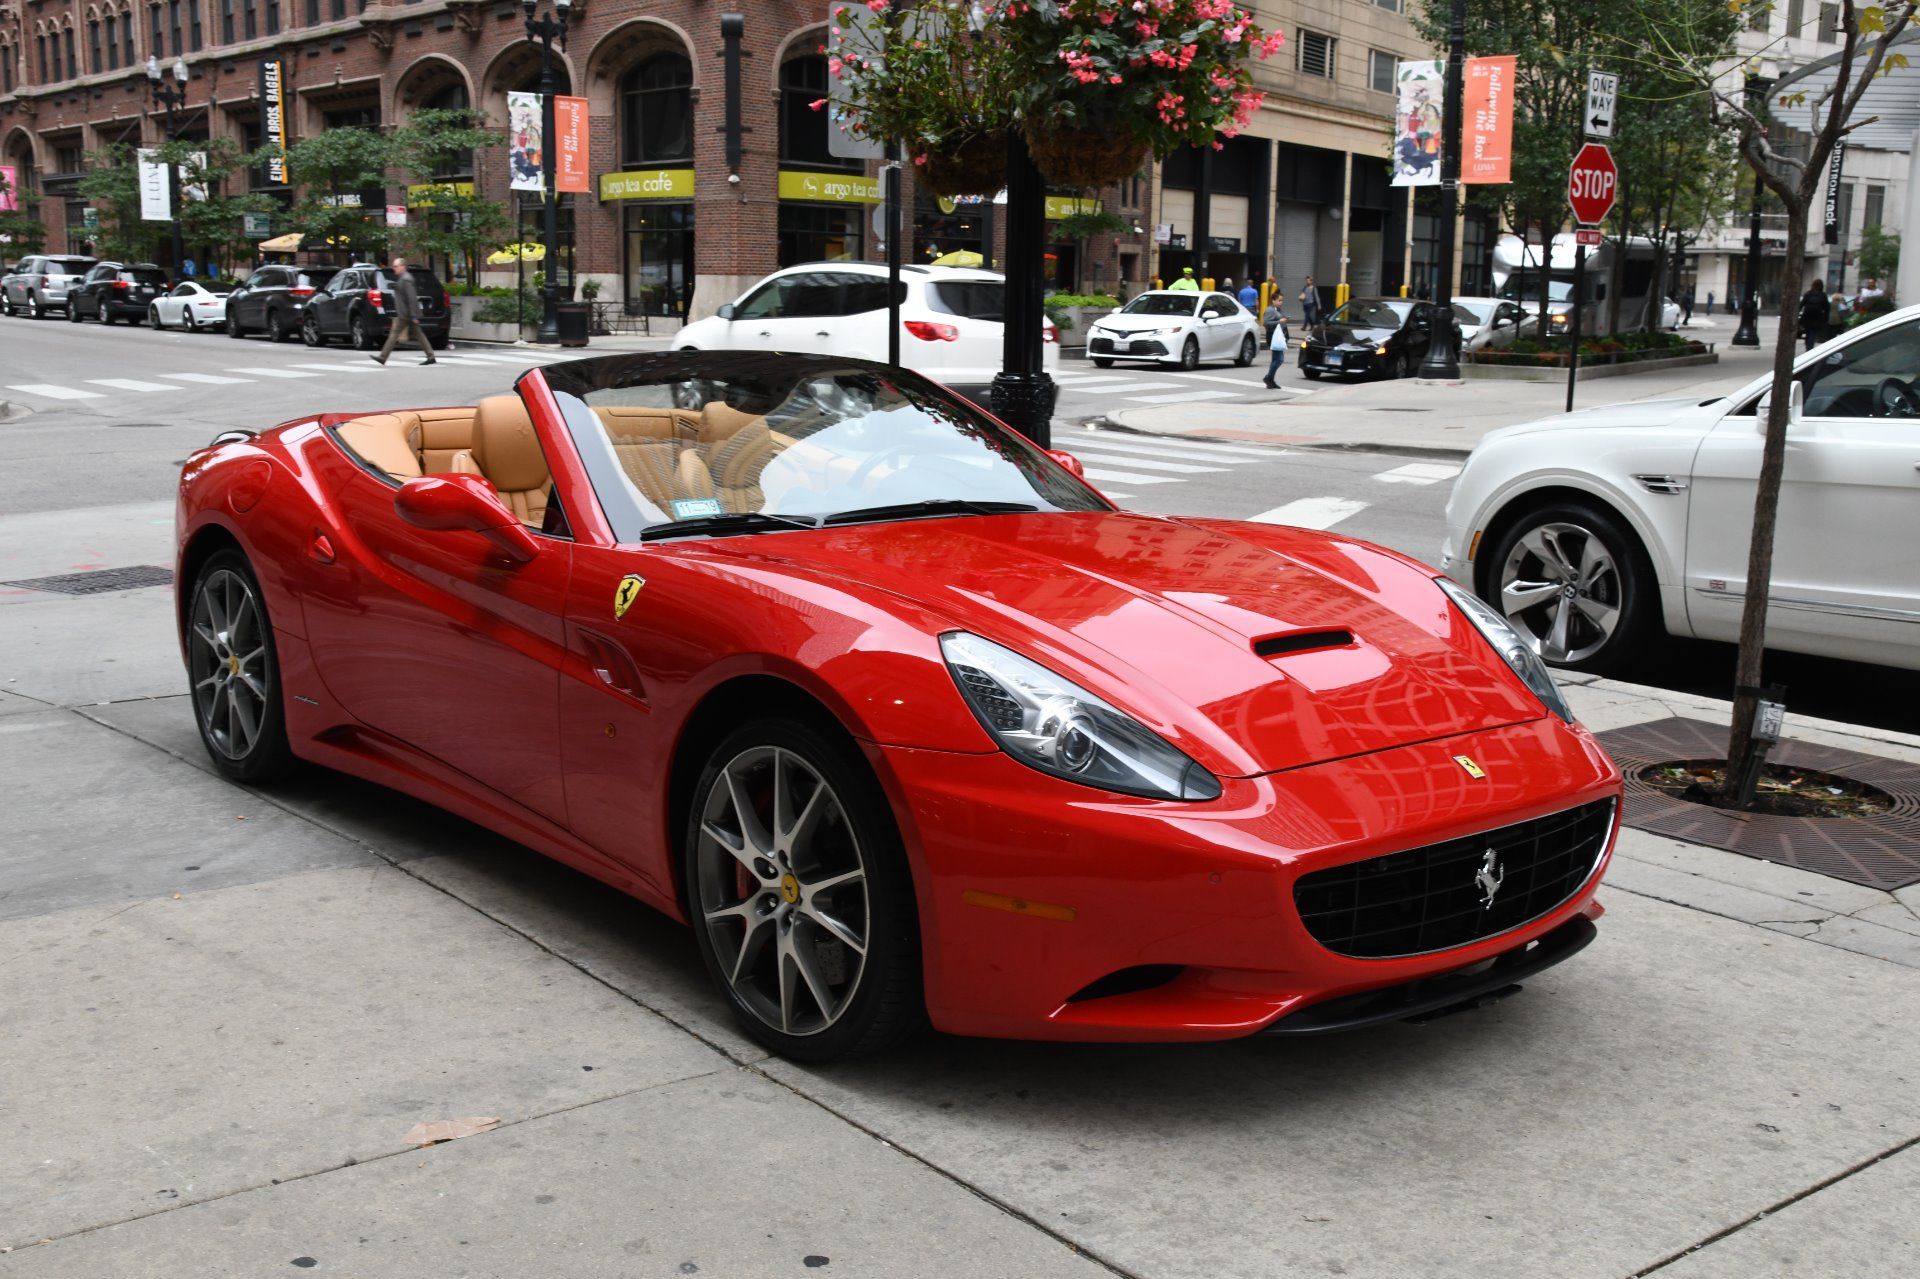 el Ferrari California 2012 aparcado en el exterior